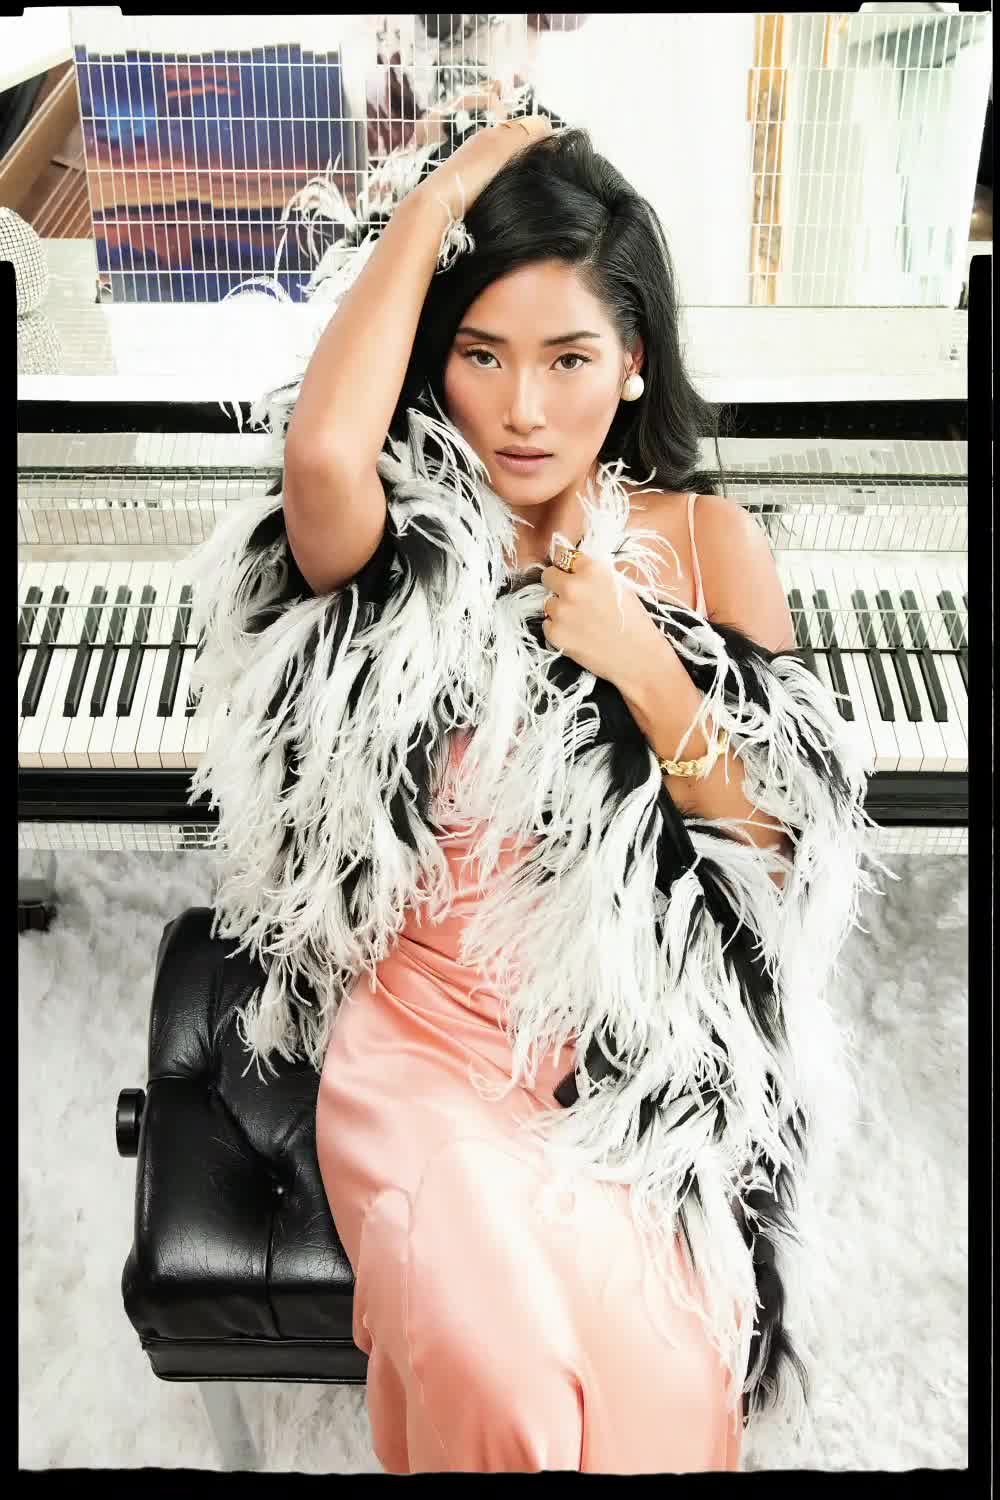 Versace Couture V Crystal Bag at 1stDibs